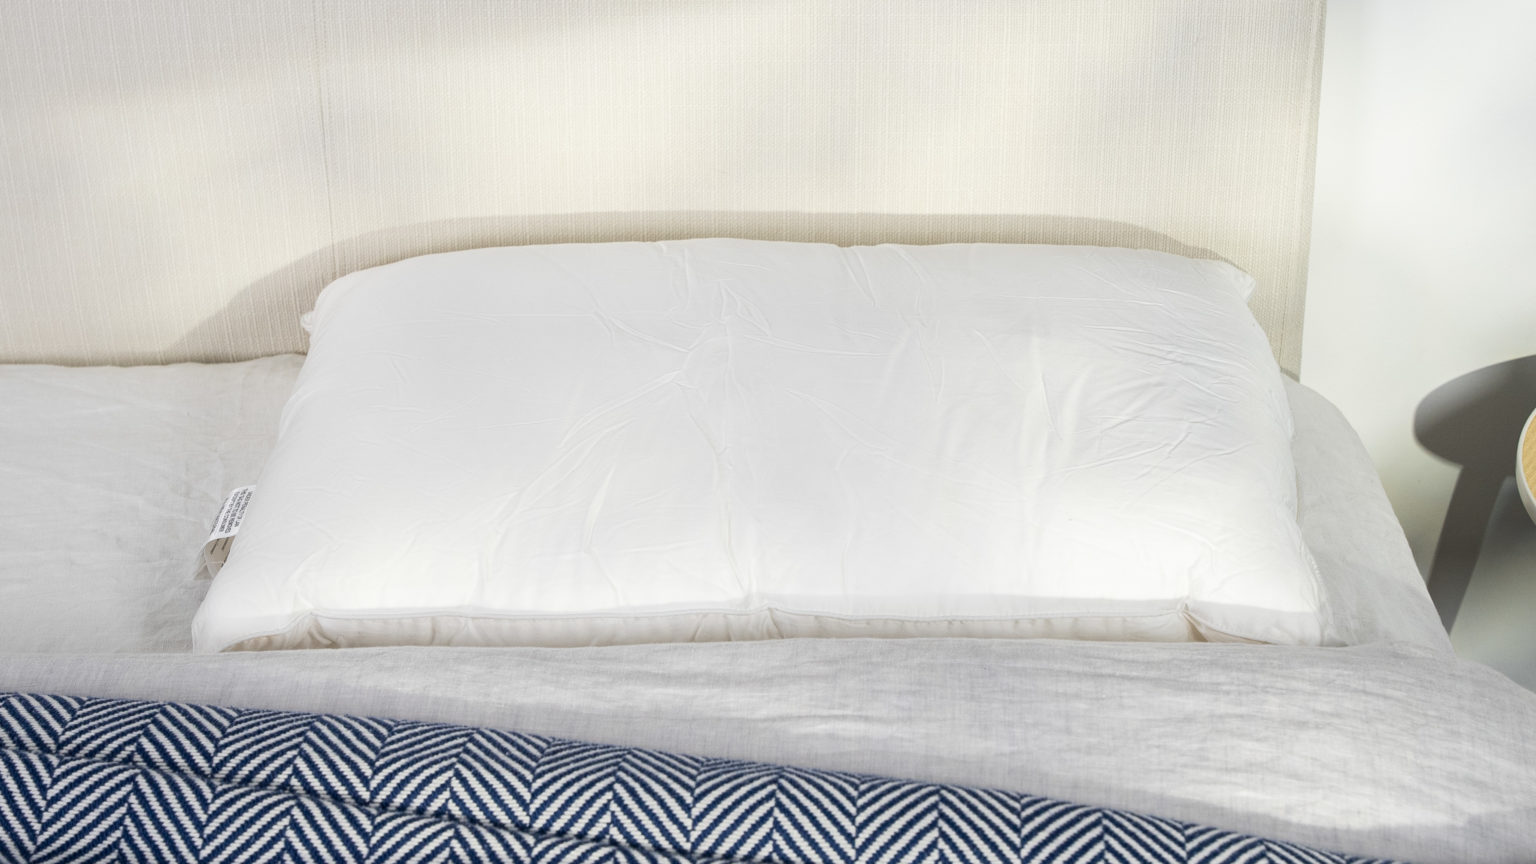 Five Star Hotel Collection Micro Denier Gel Fiber Pillow, Queen